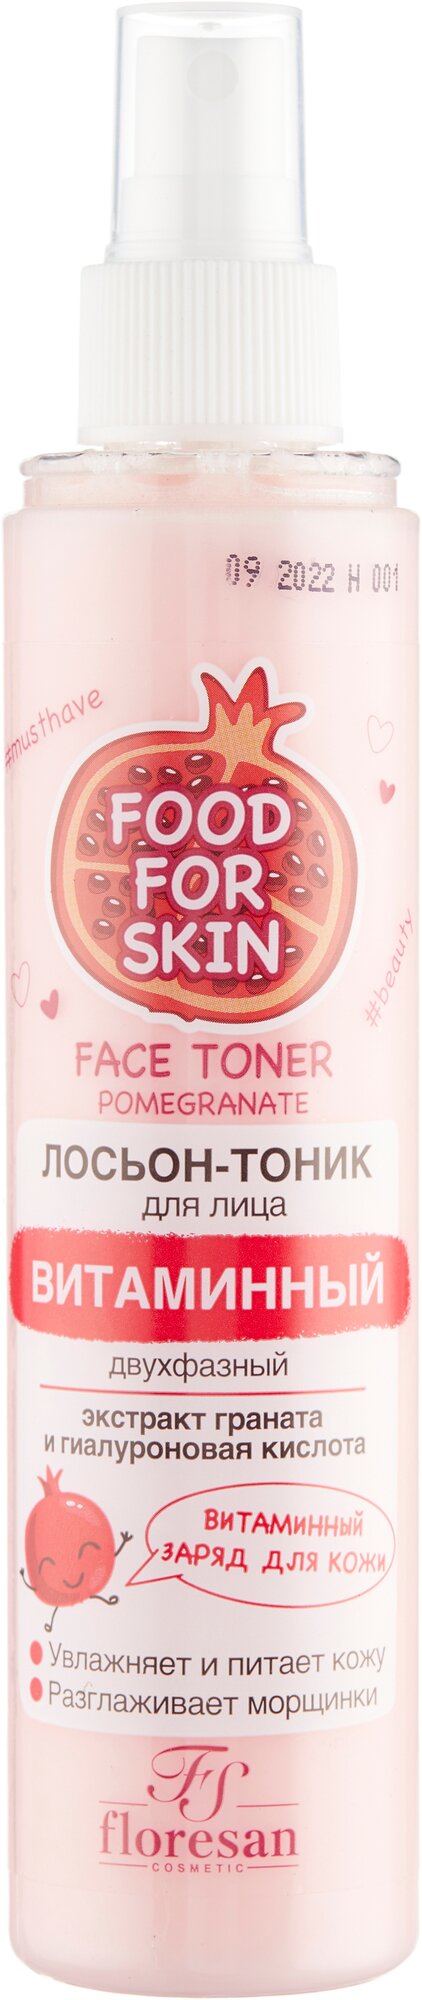 Floresan лосьон-тоник Витаминный Food for Skin гранат